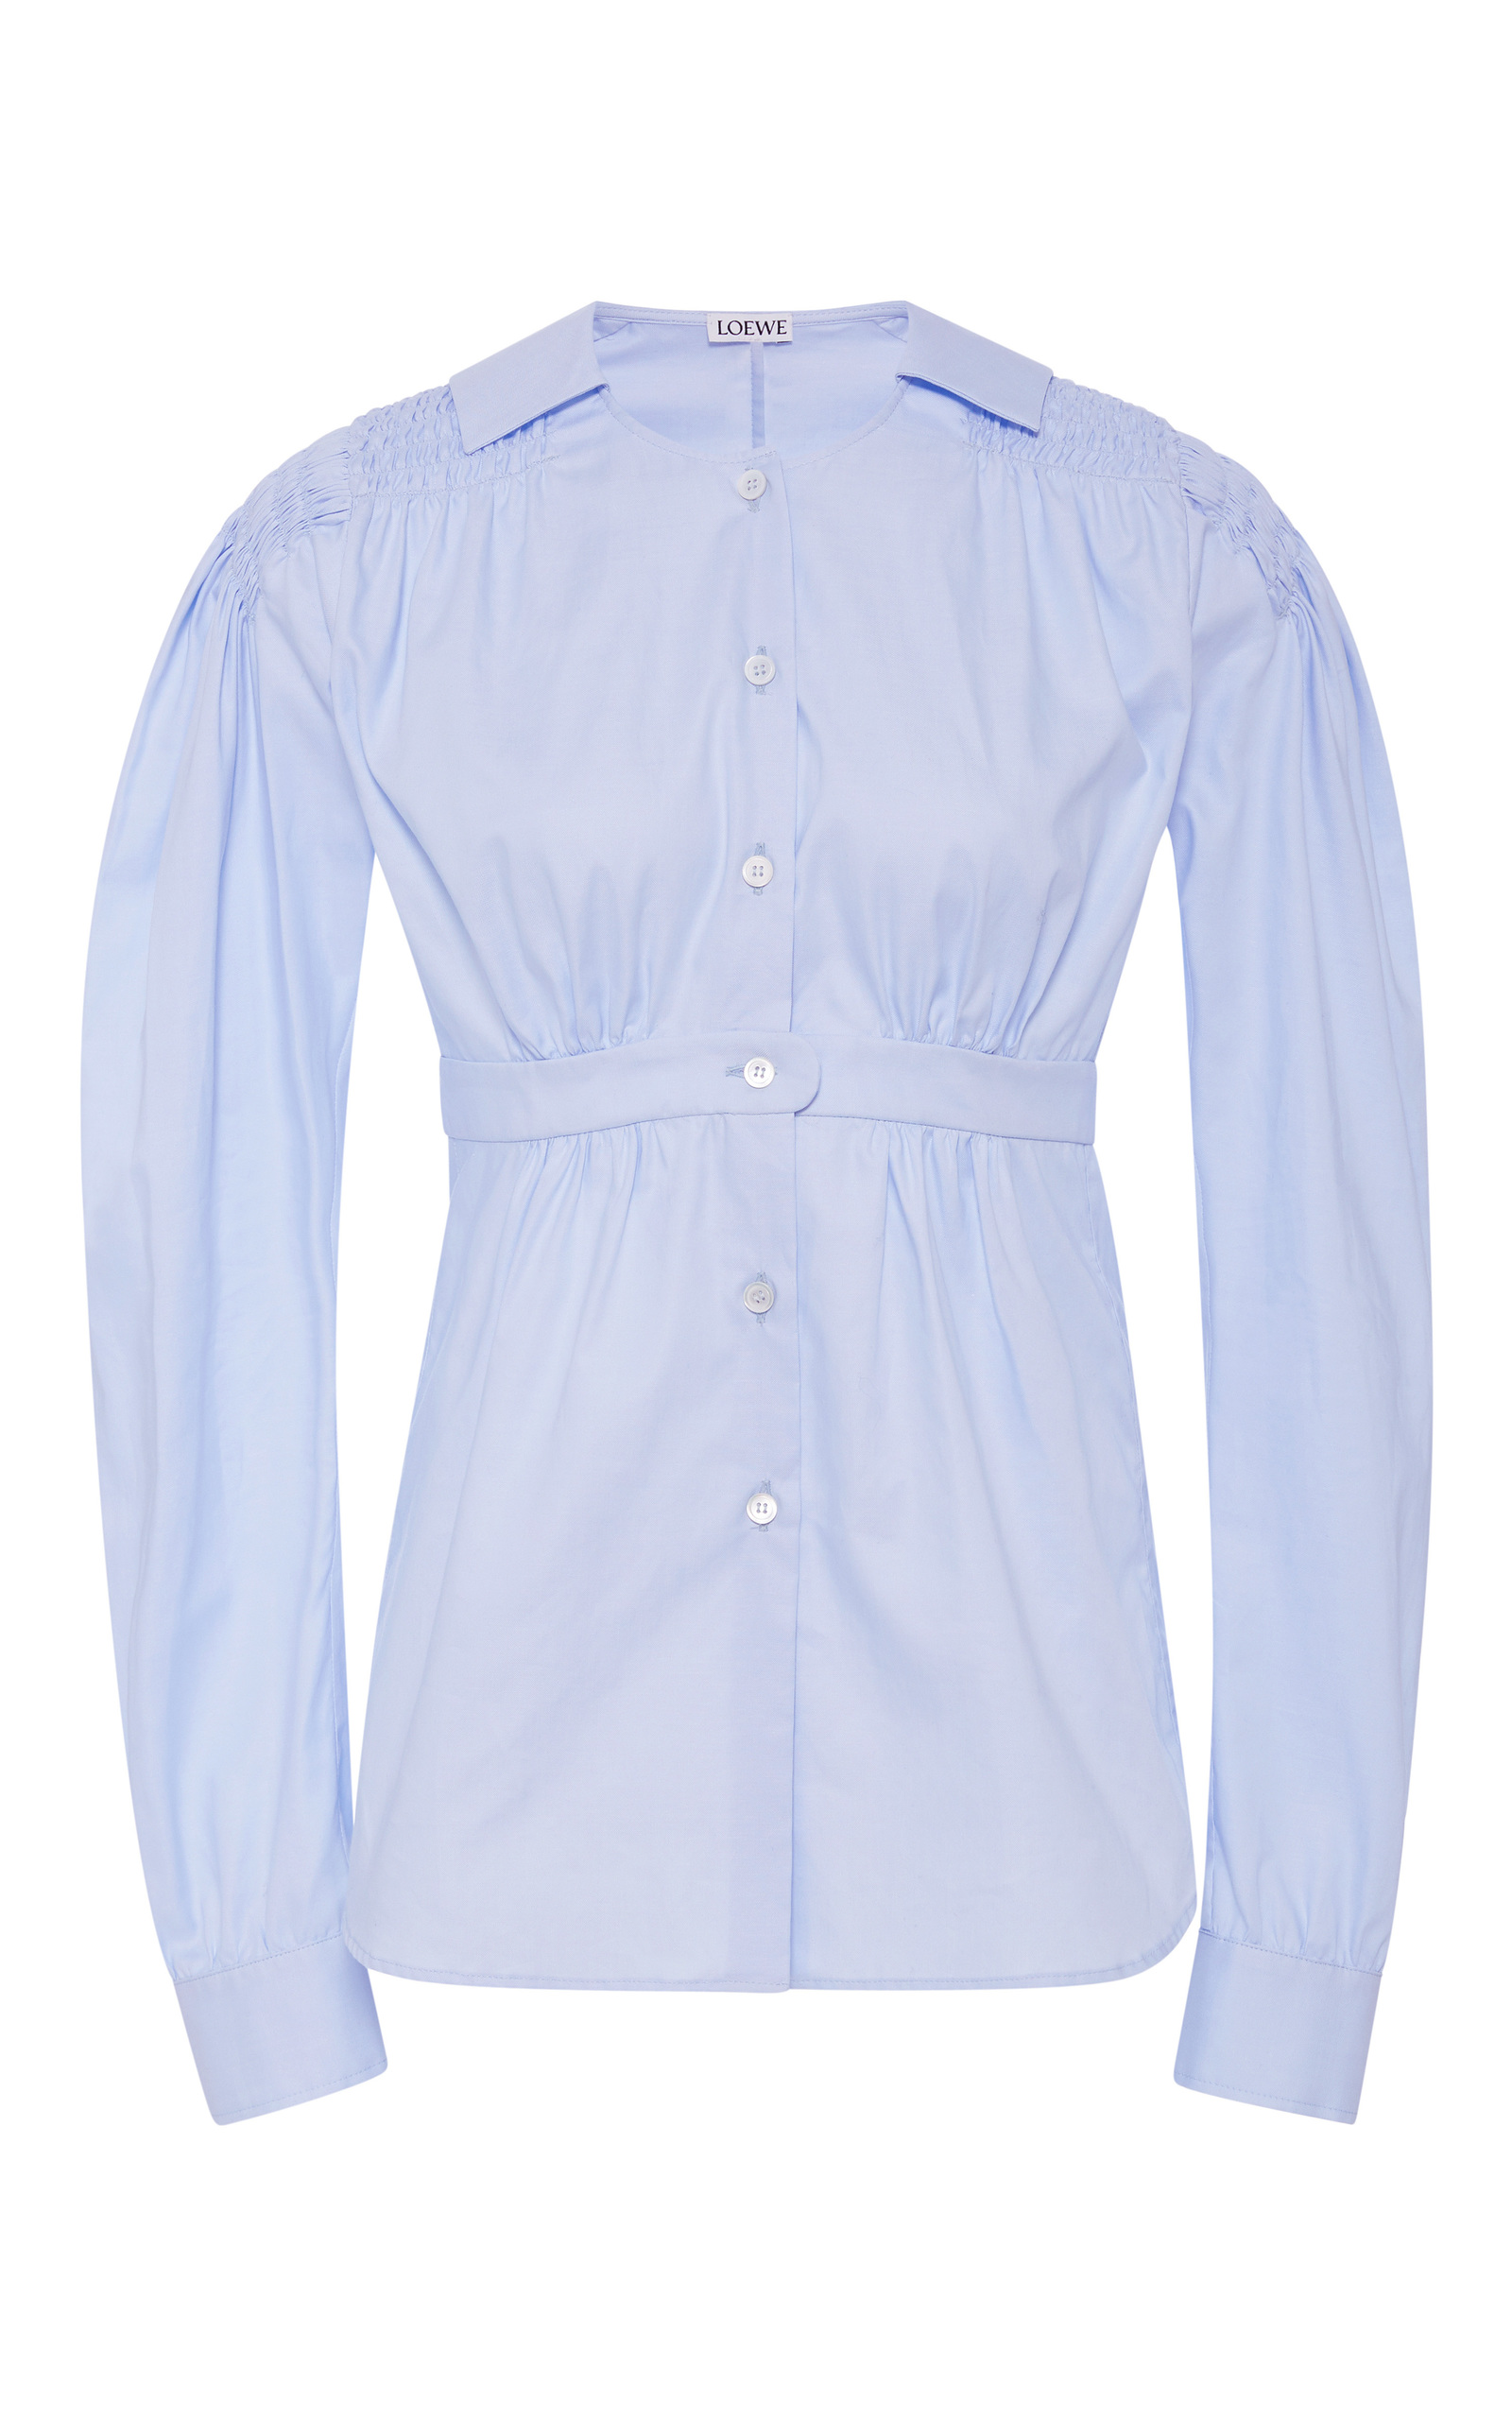 Loewe Smocked Cotton Puff-Sleeve Blouse, Light Blue | ModeSens